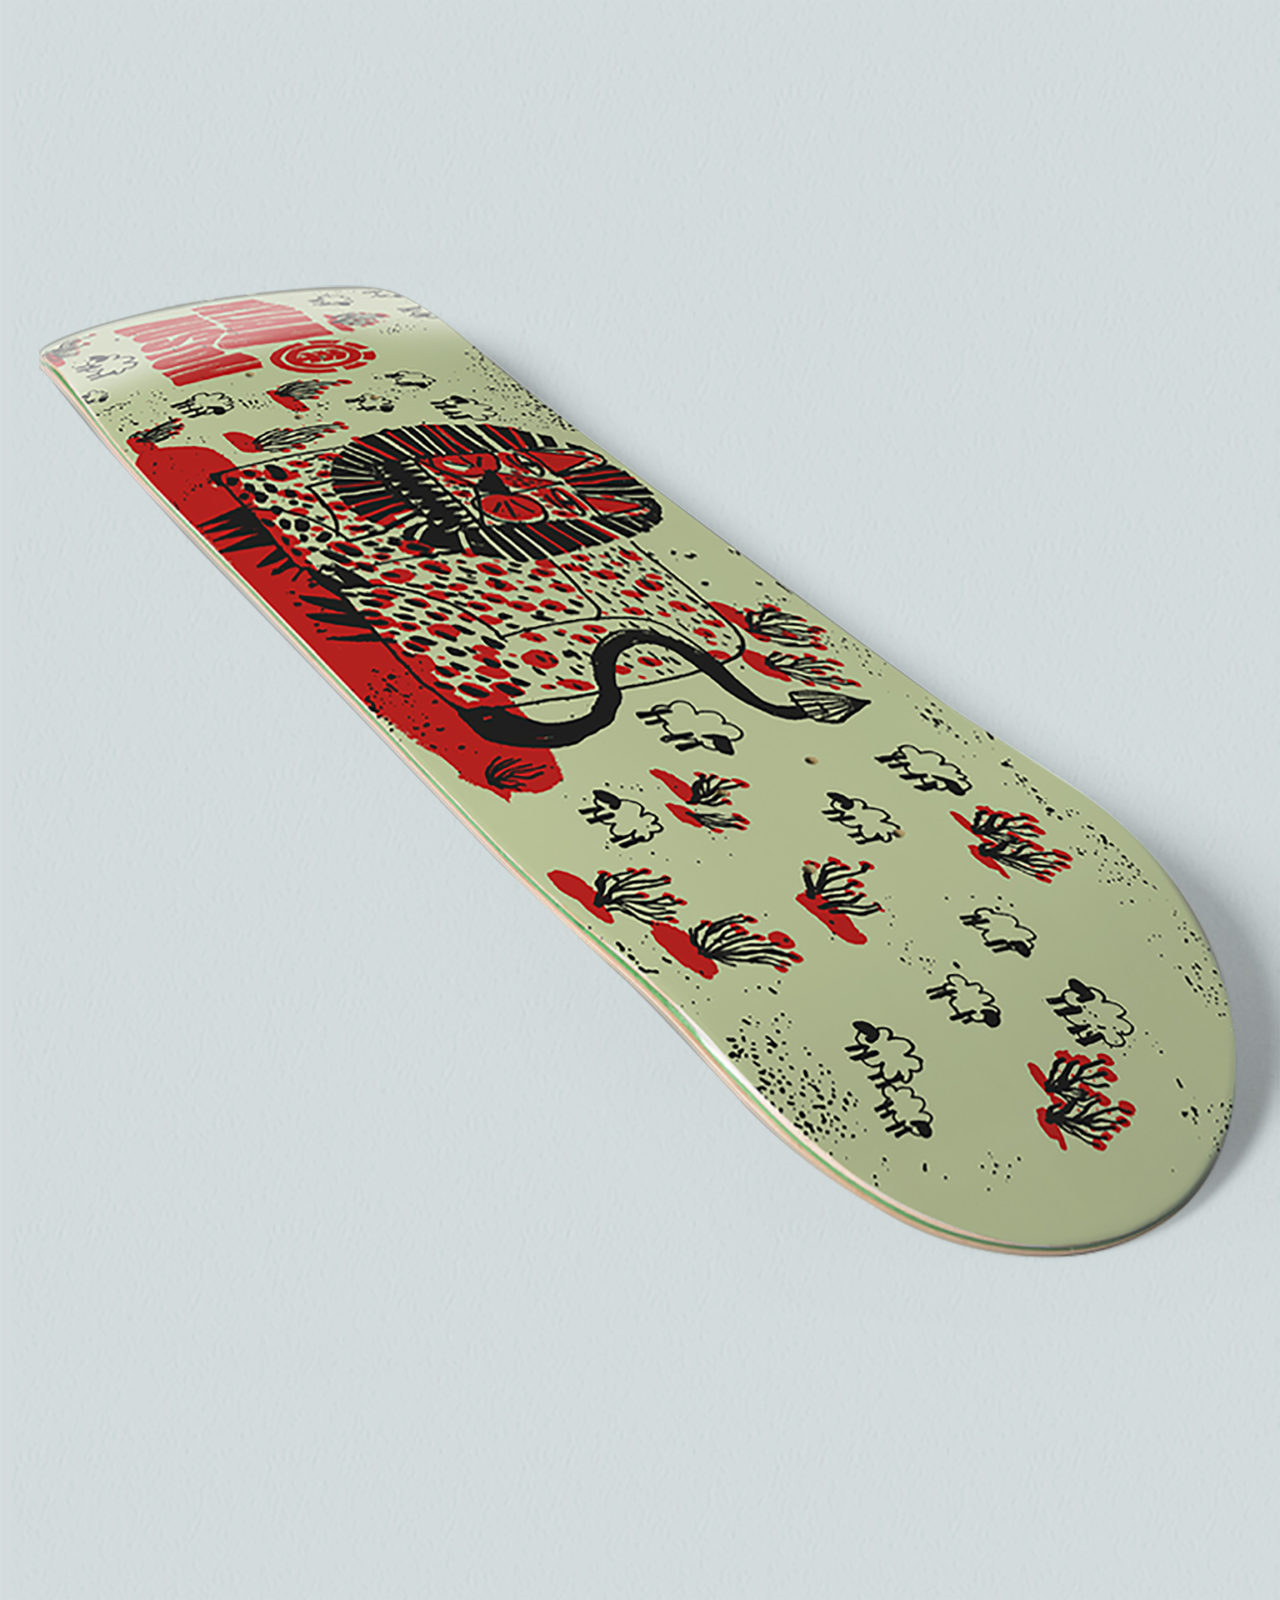 element skateboards acquisition date